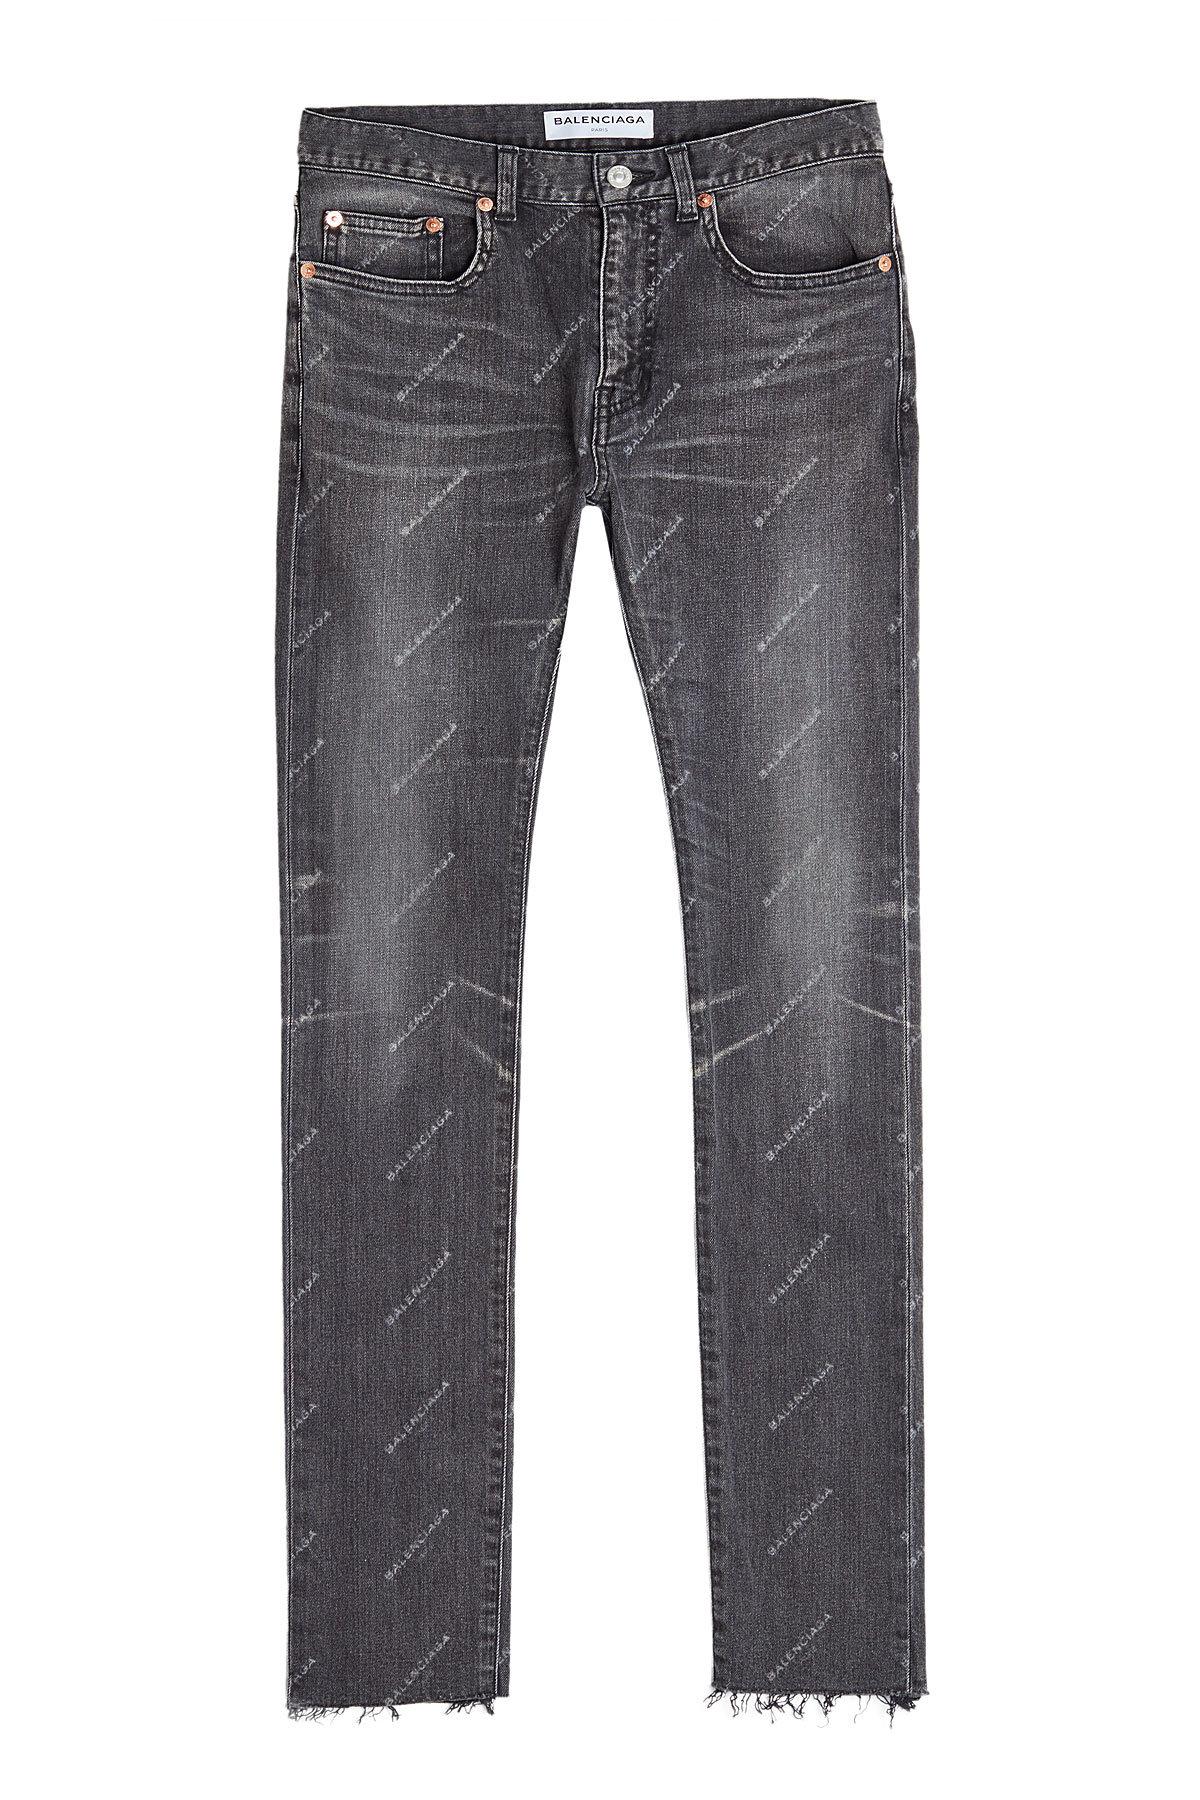 Balenciaga Printed Jeans - Lyst